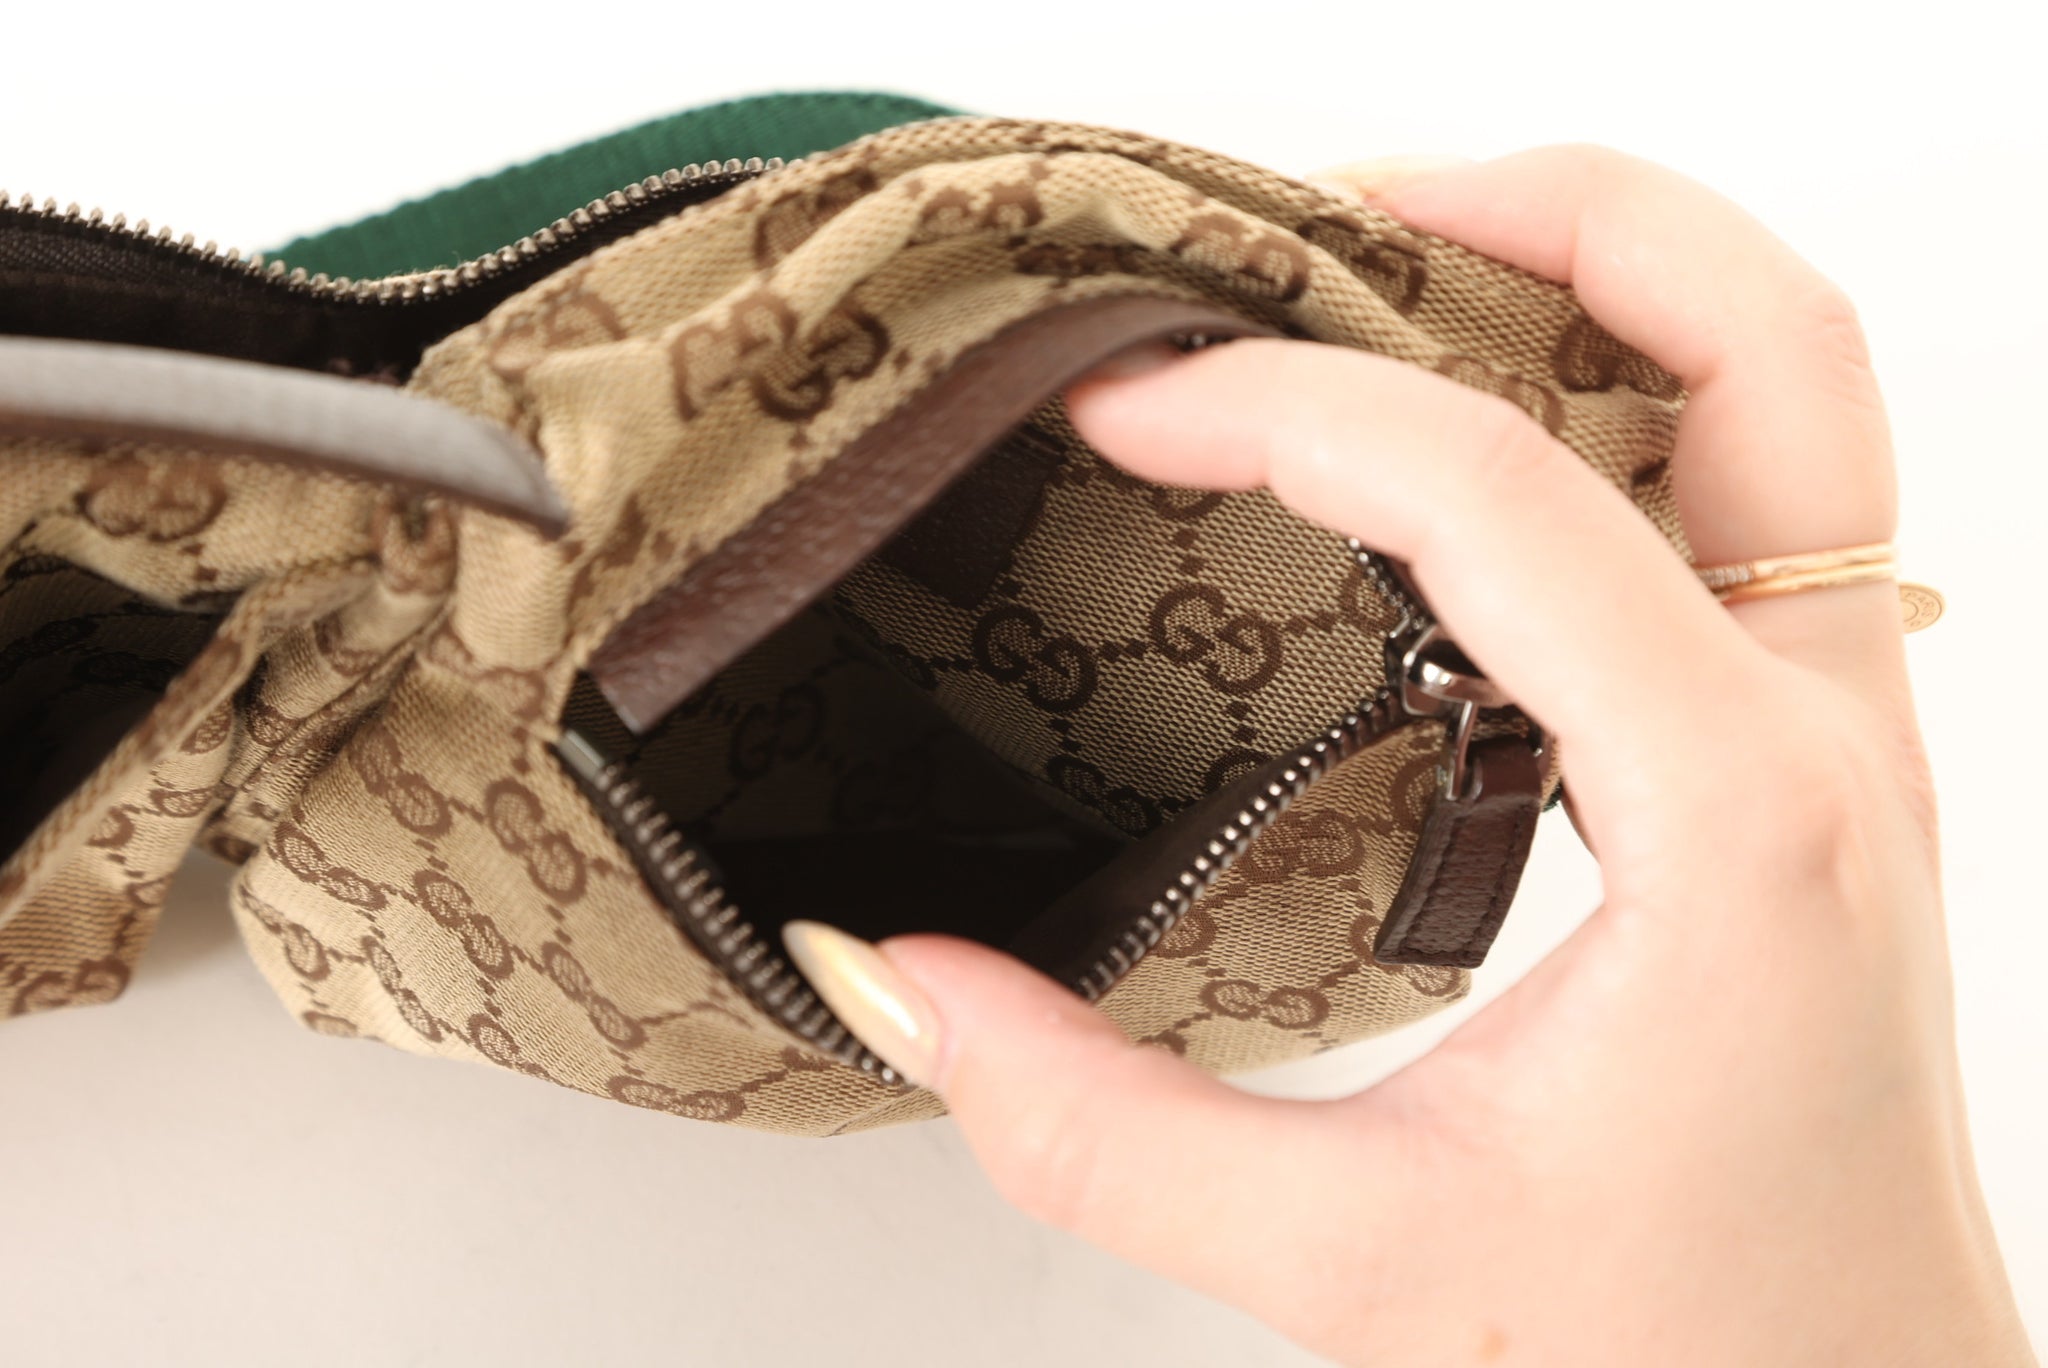 Gucci Monogram Waist Bag